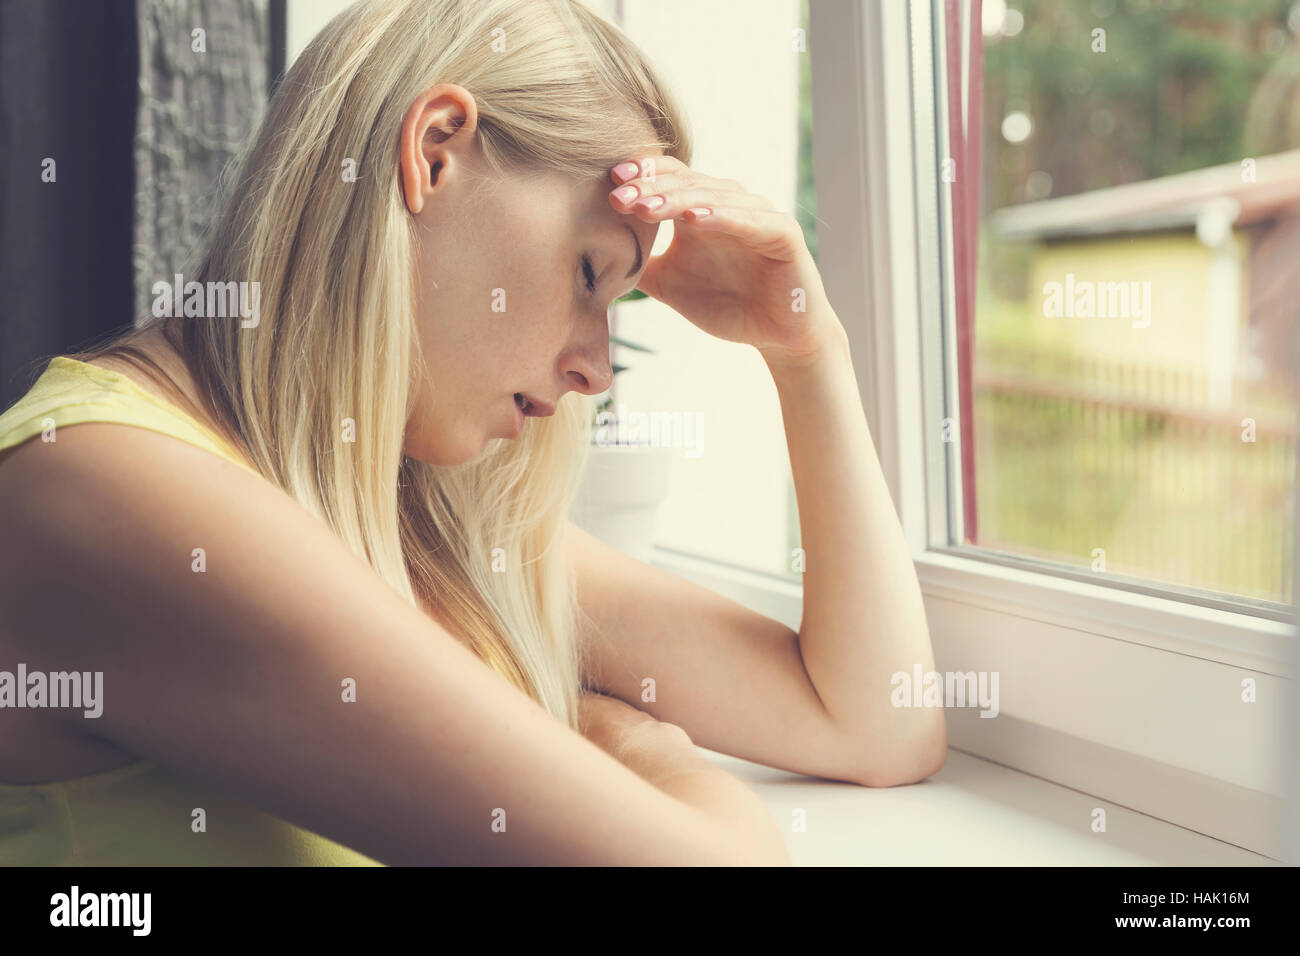 müde, deprimiert Frau am Fenster sitzen Stockfoto